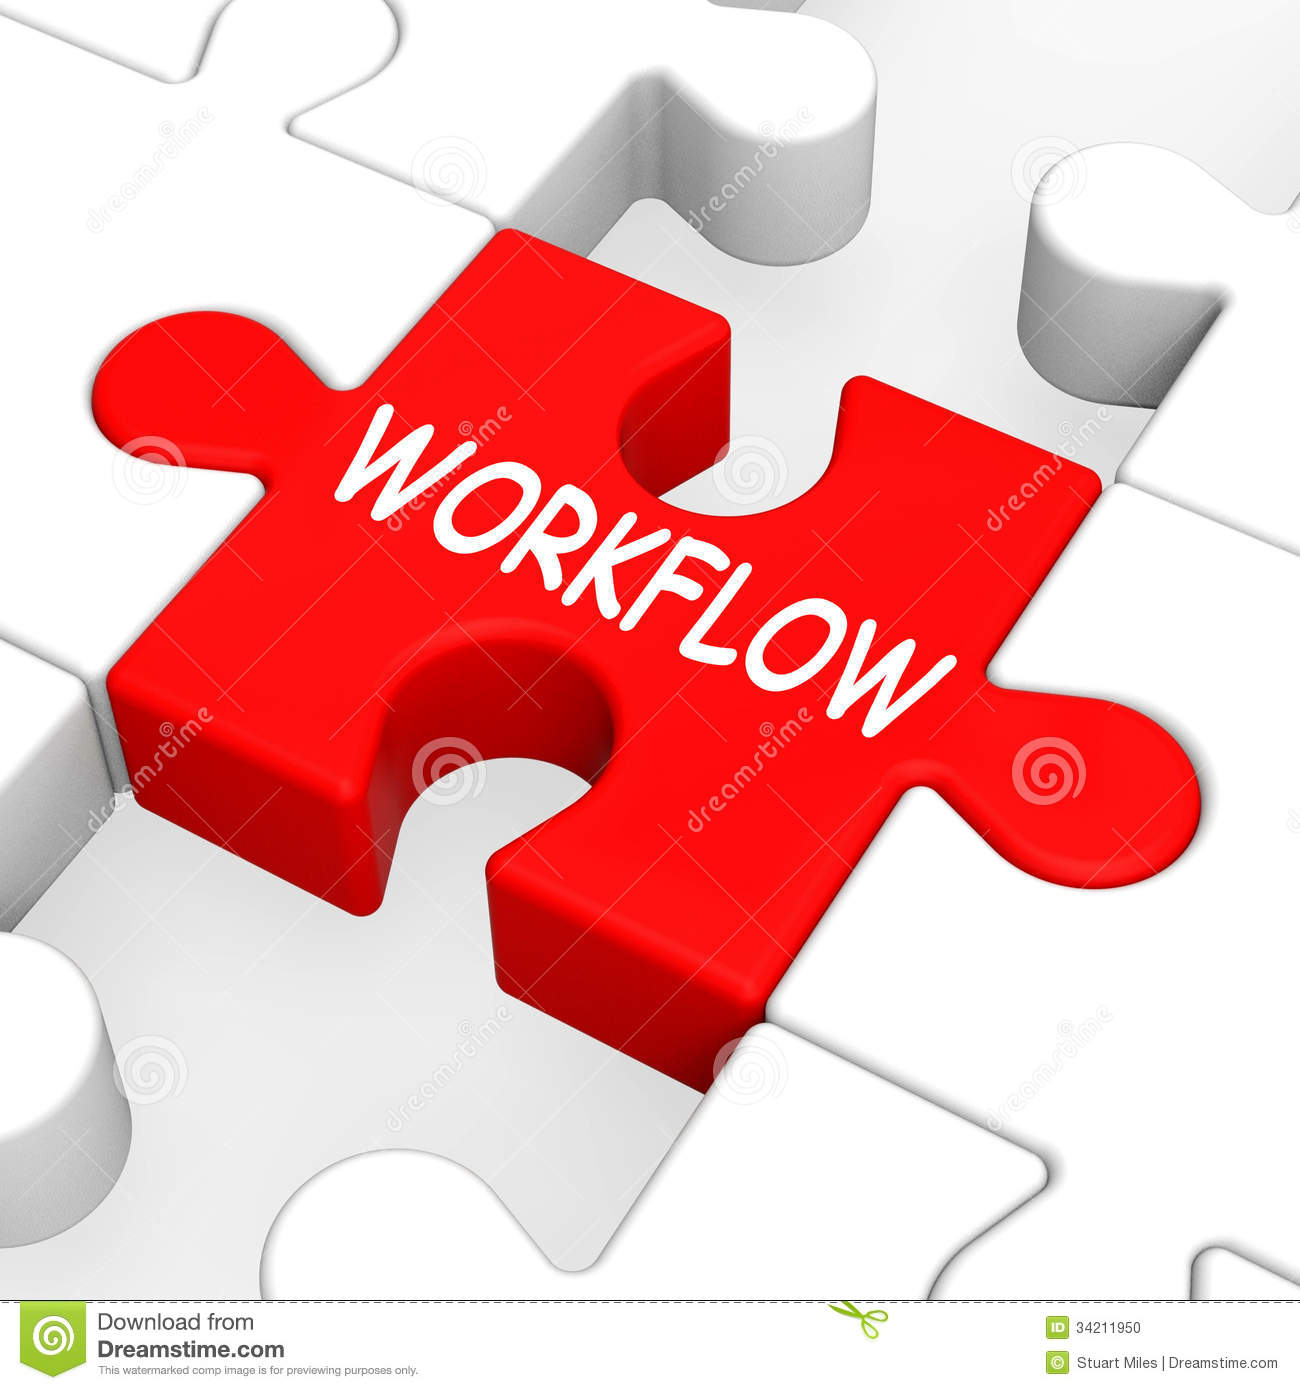 Workflow Puzzle Showing Process Flow Or Procedure